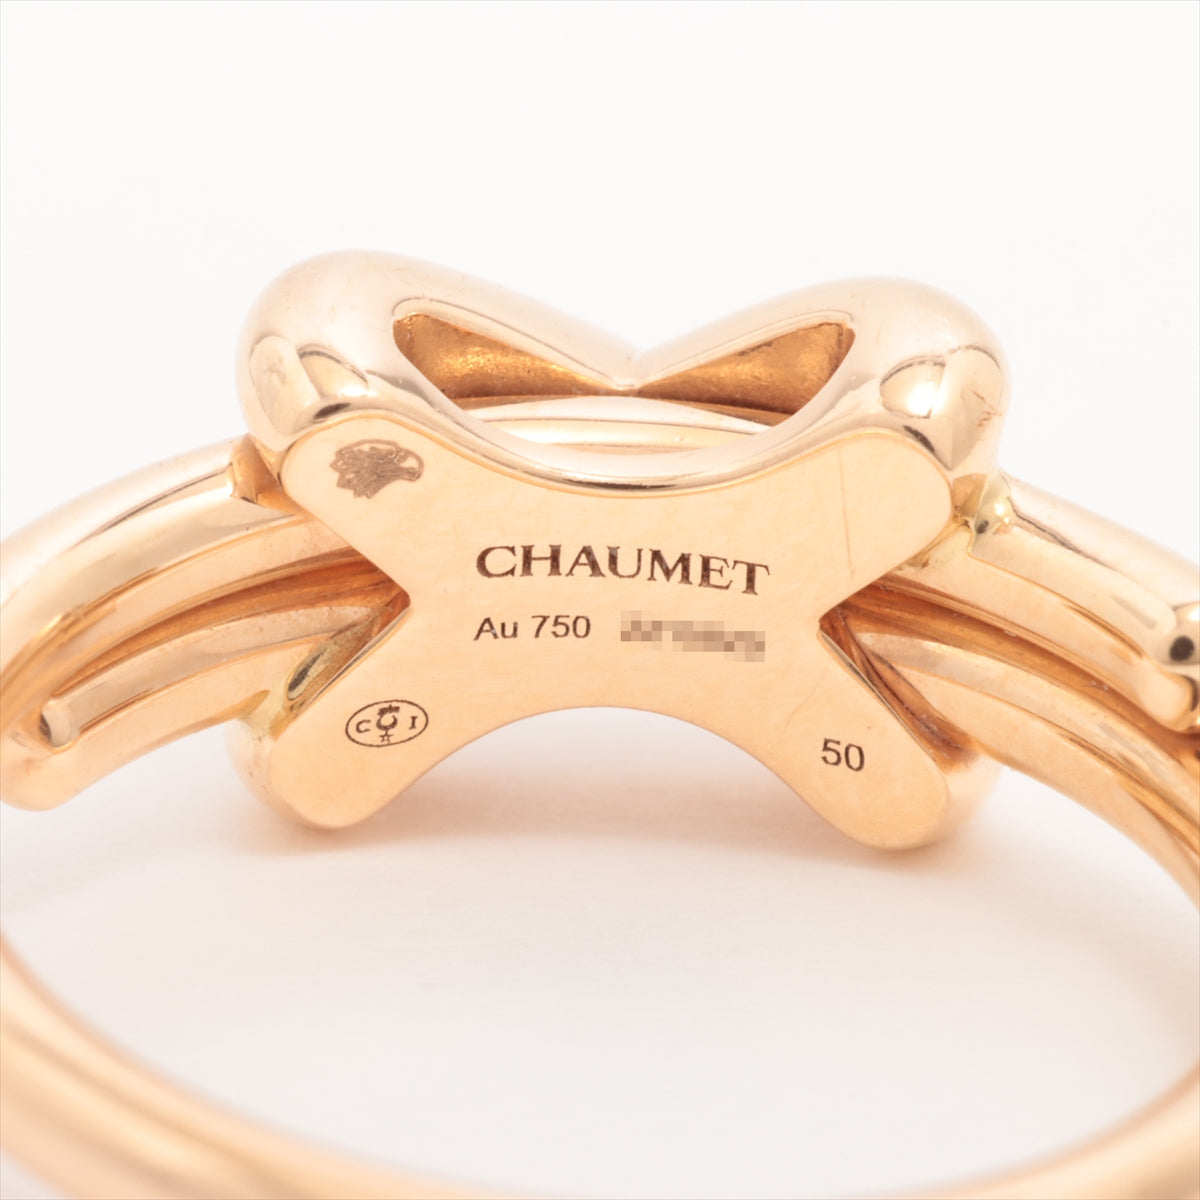 Chaumet Liens Doo Chaumet Permier Liens diamond rings 750(PG) 5.2g 50